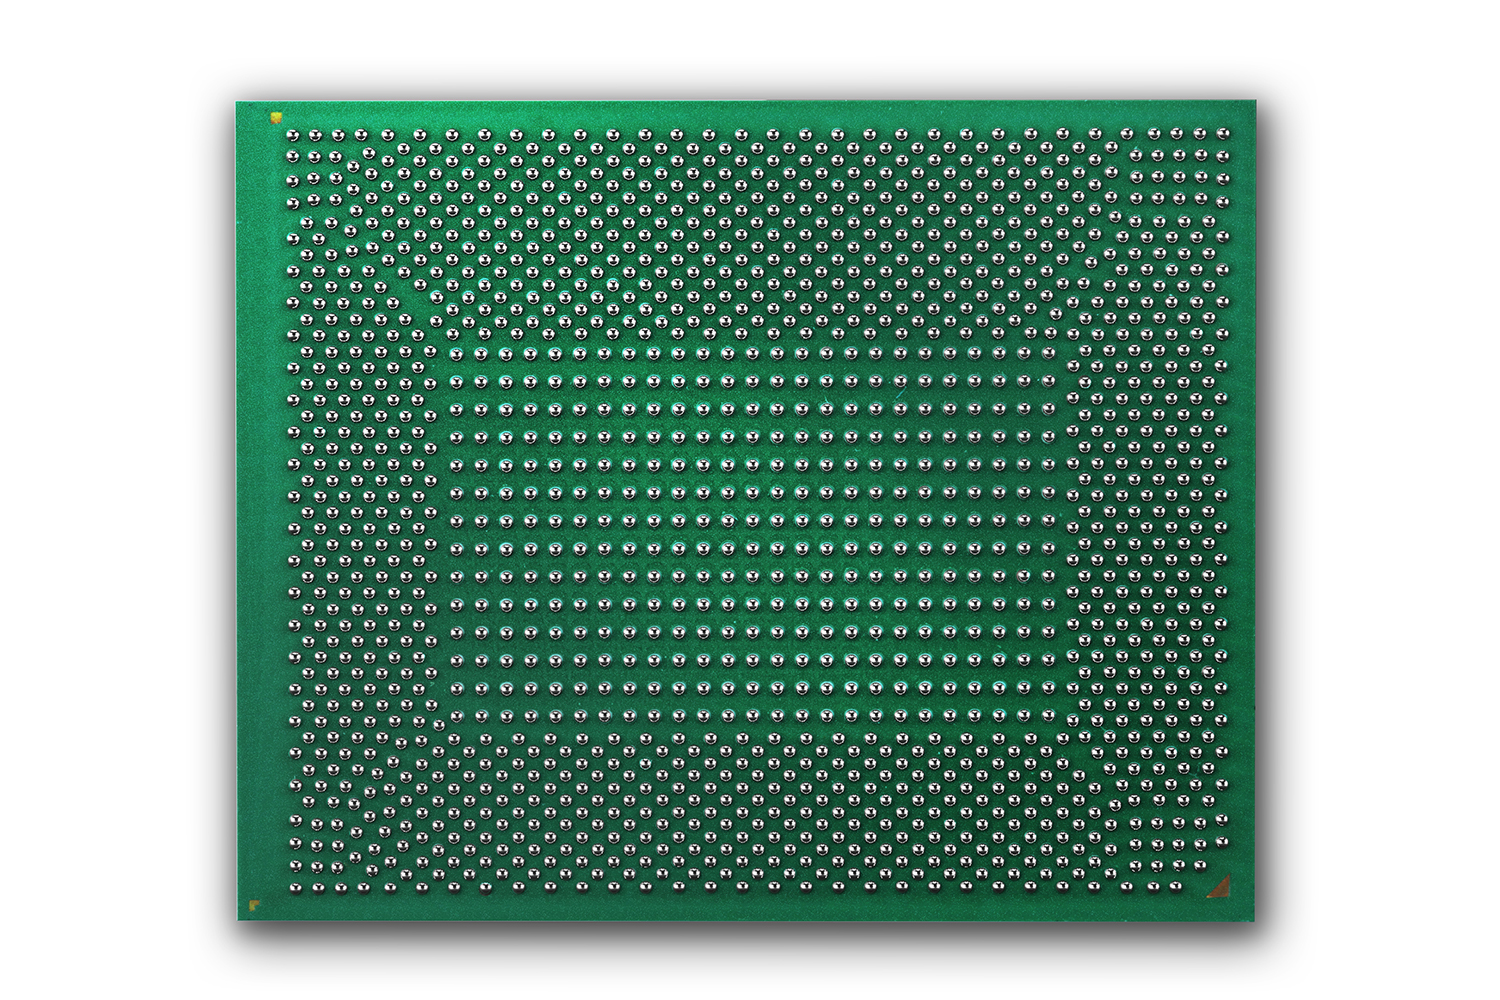 Intel 7th Generation Core